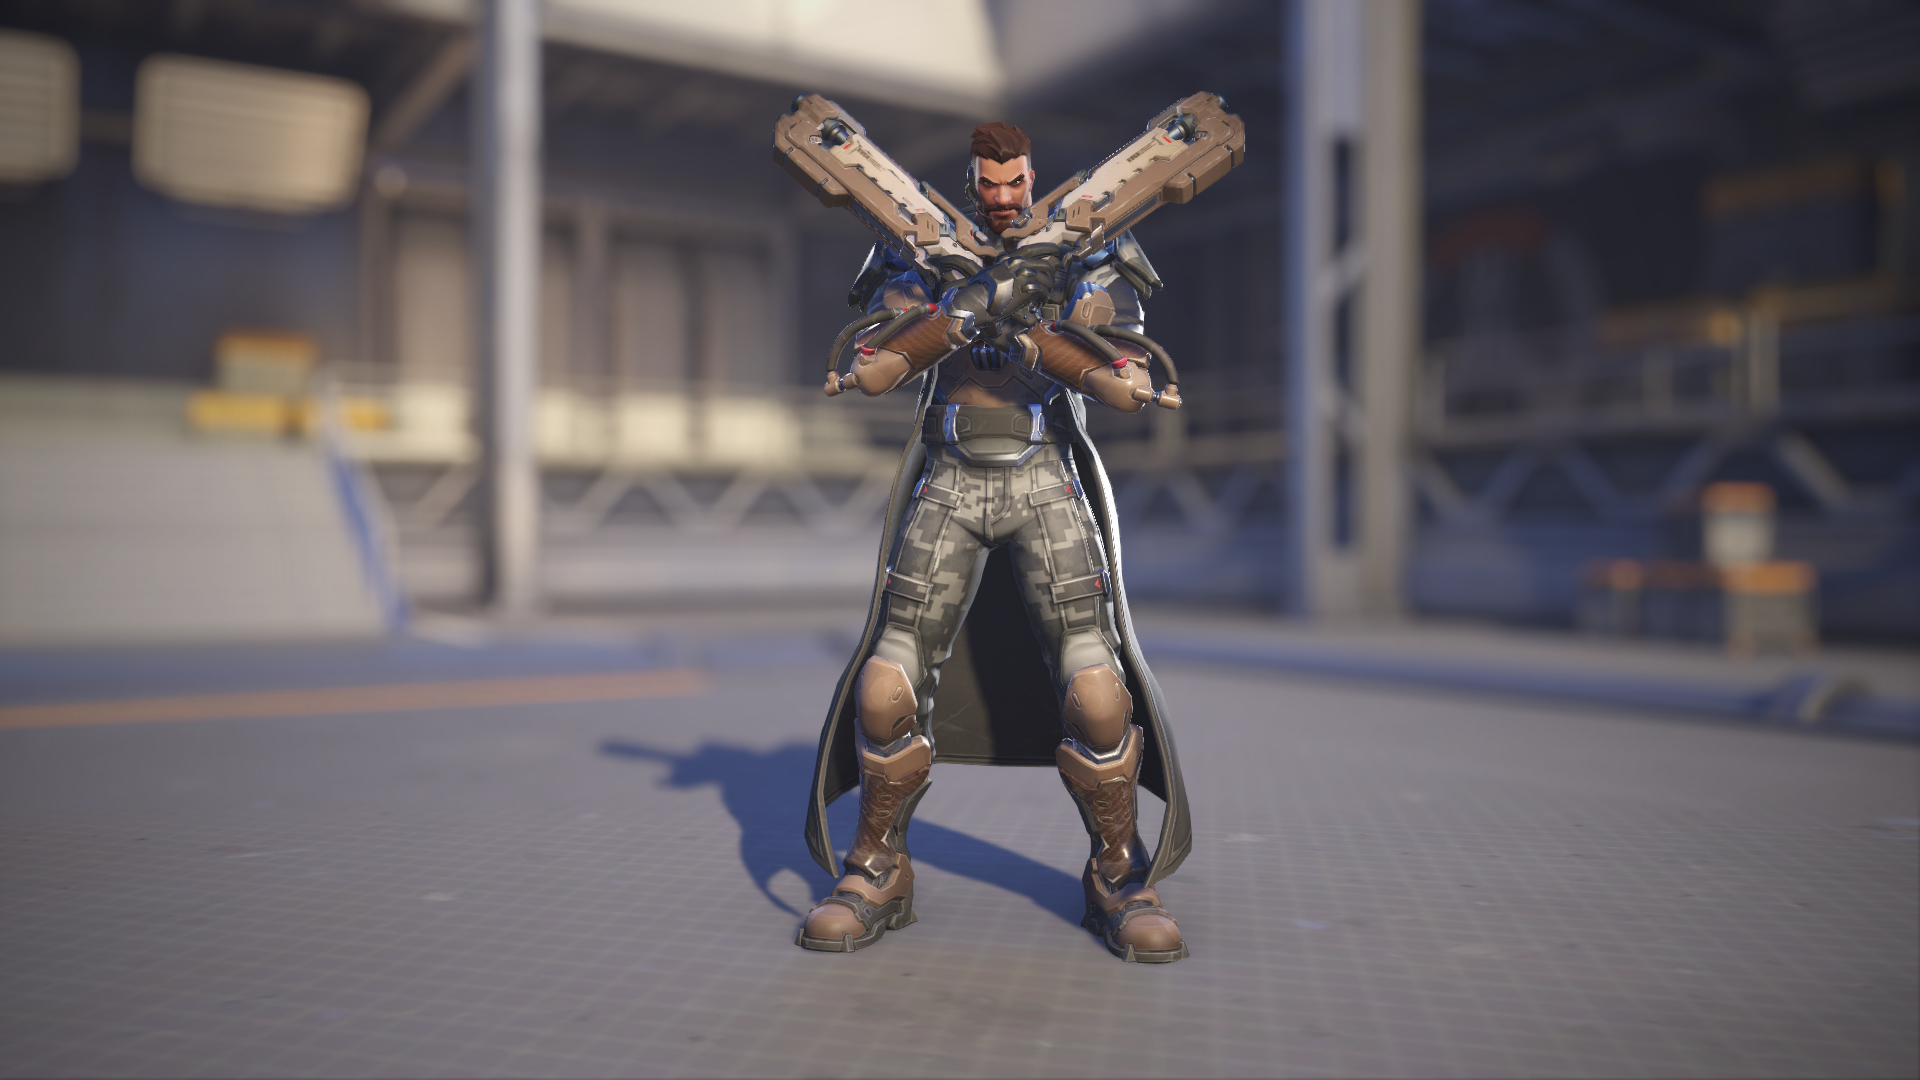 Reaper models his Soldier: 24 skin in Overwatch 2.